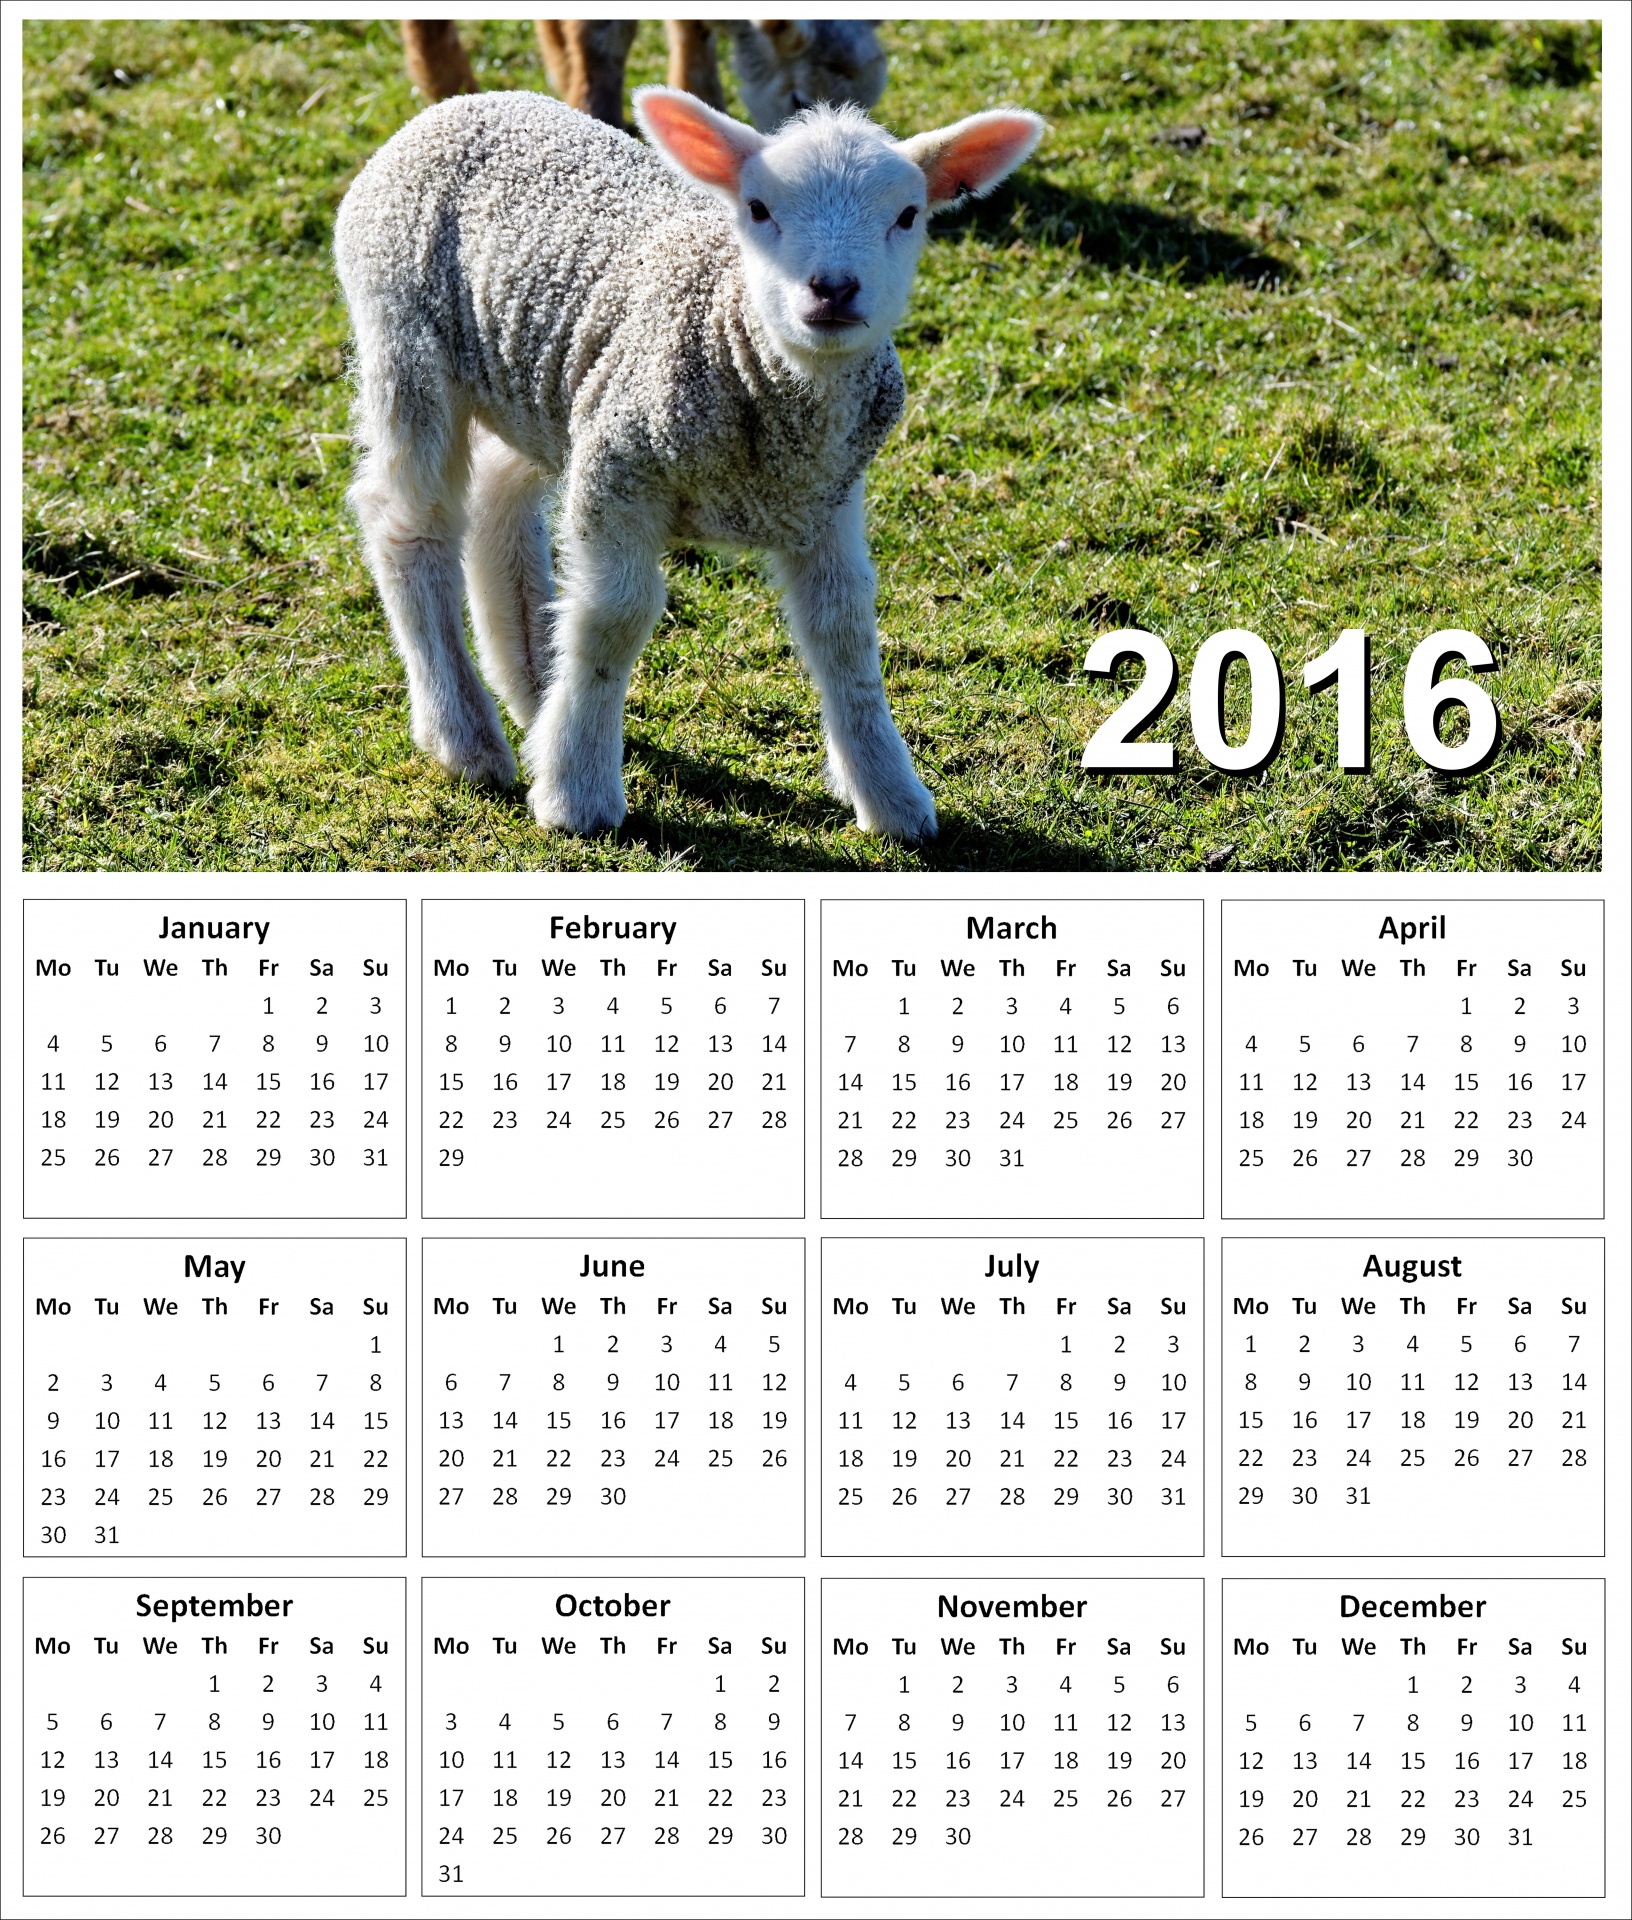 2016-lamb-calendar-free-stock-photo-public-domain-pictures